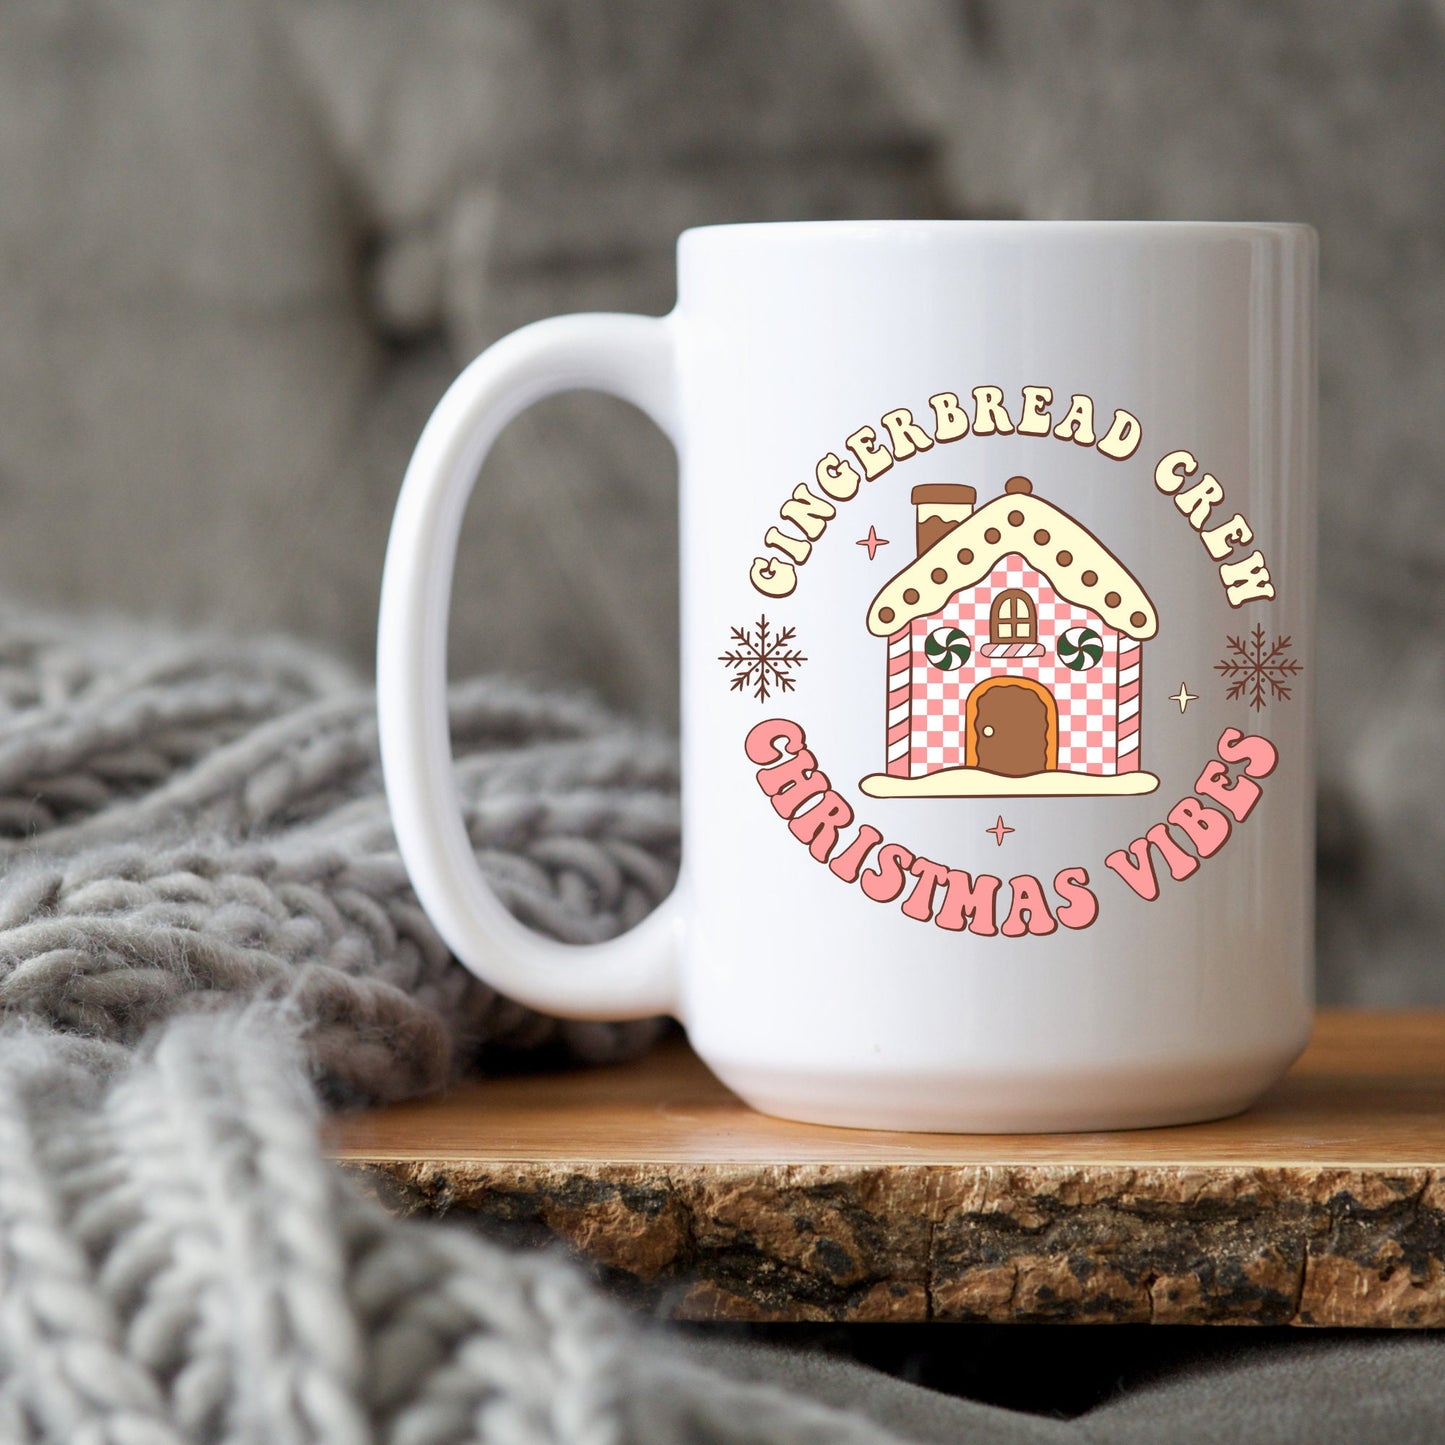 Gingerbread Coffee Mug Accent Mug Camping Mug Travel Mug Beer